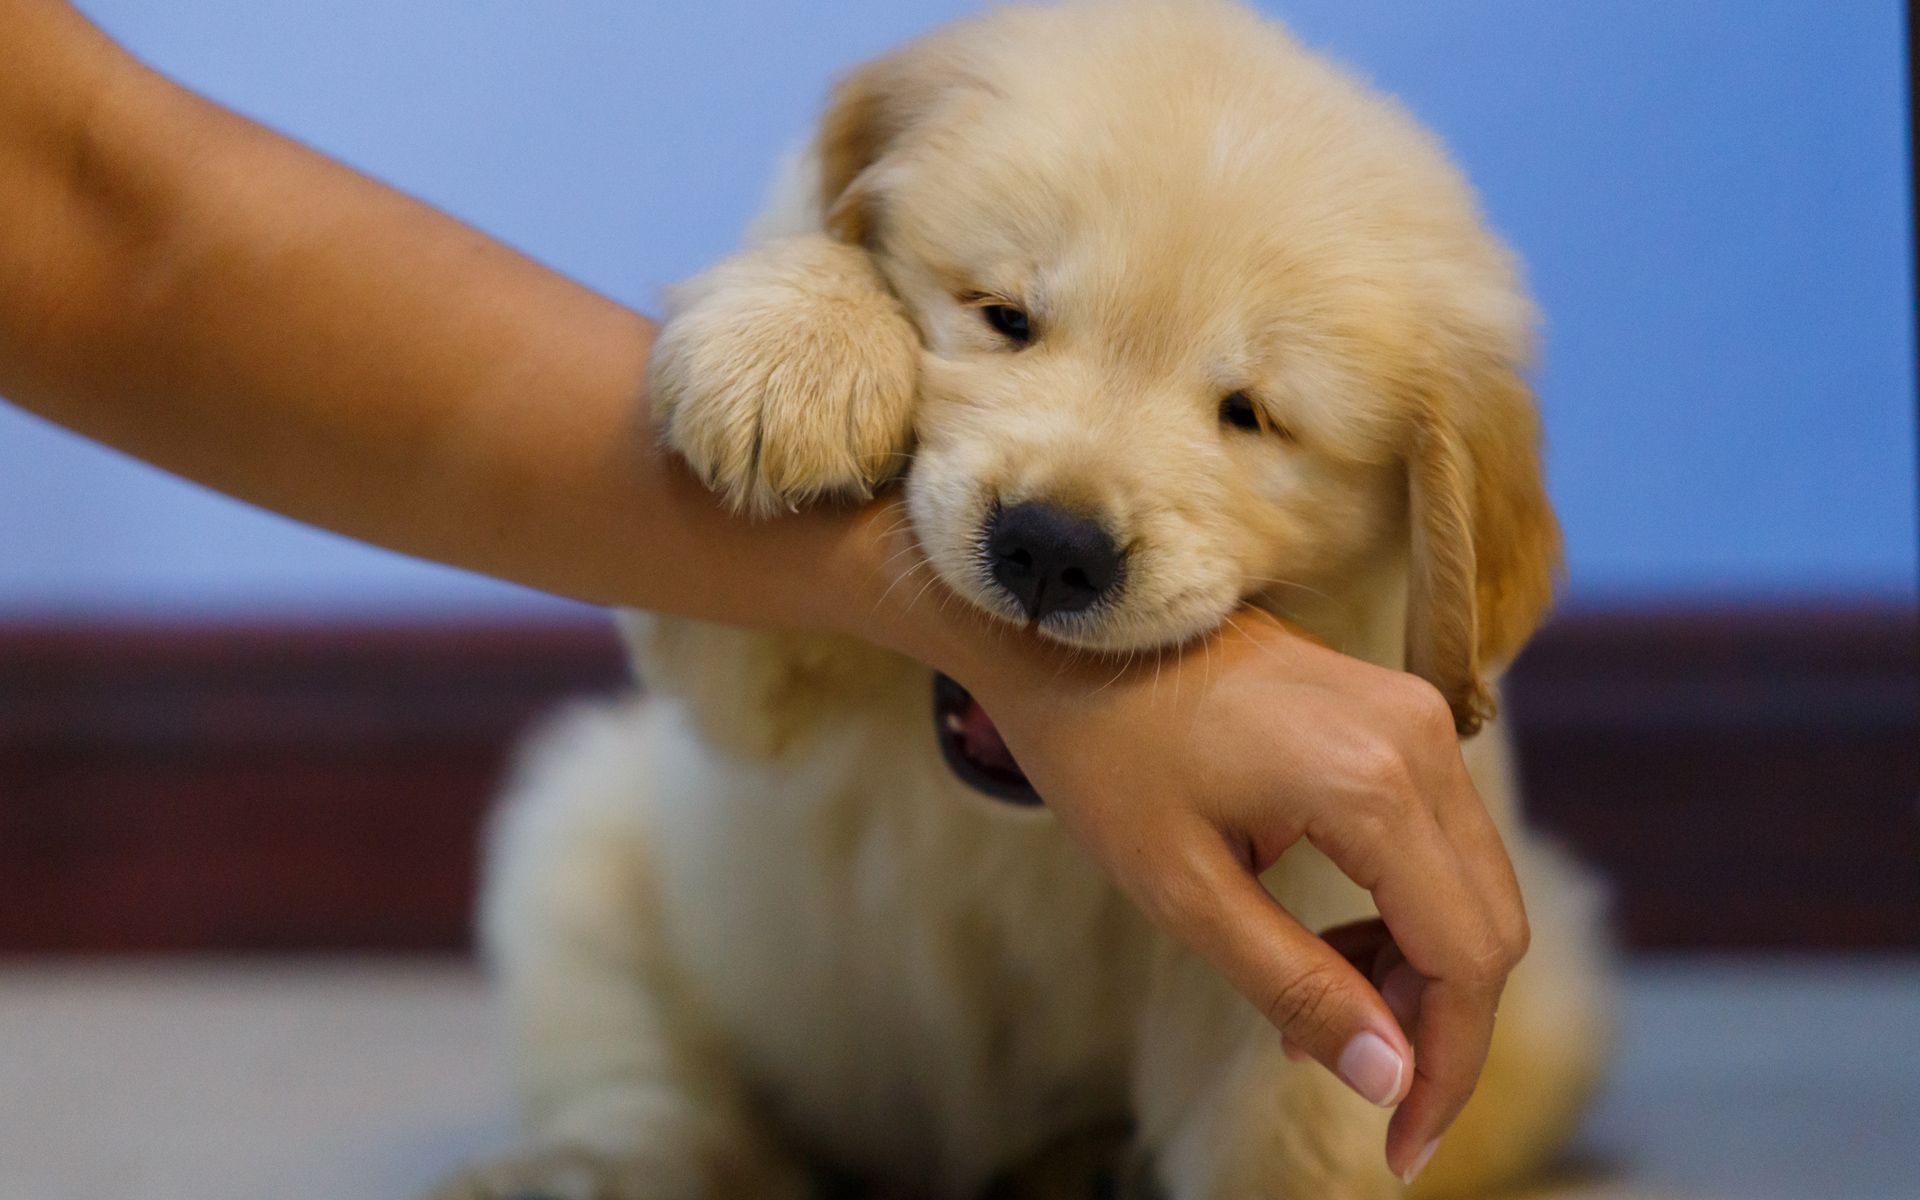 Puppy Biting the Man's Hand